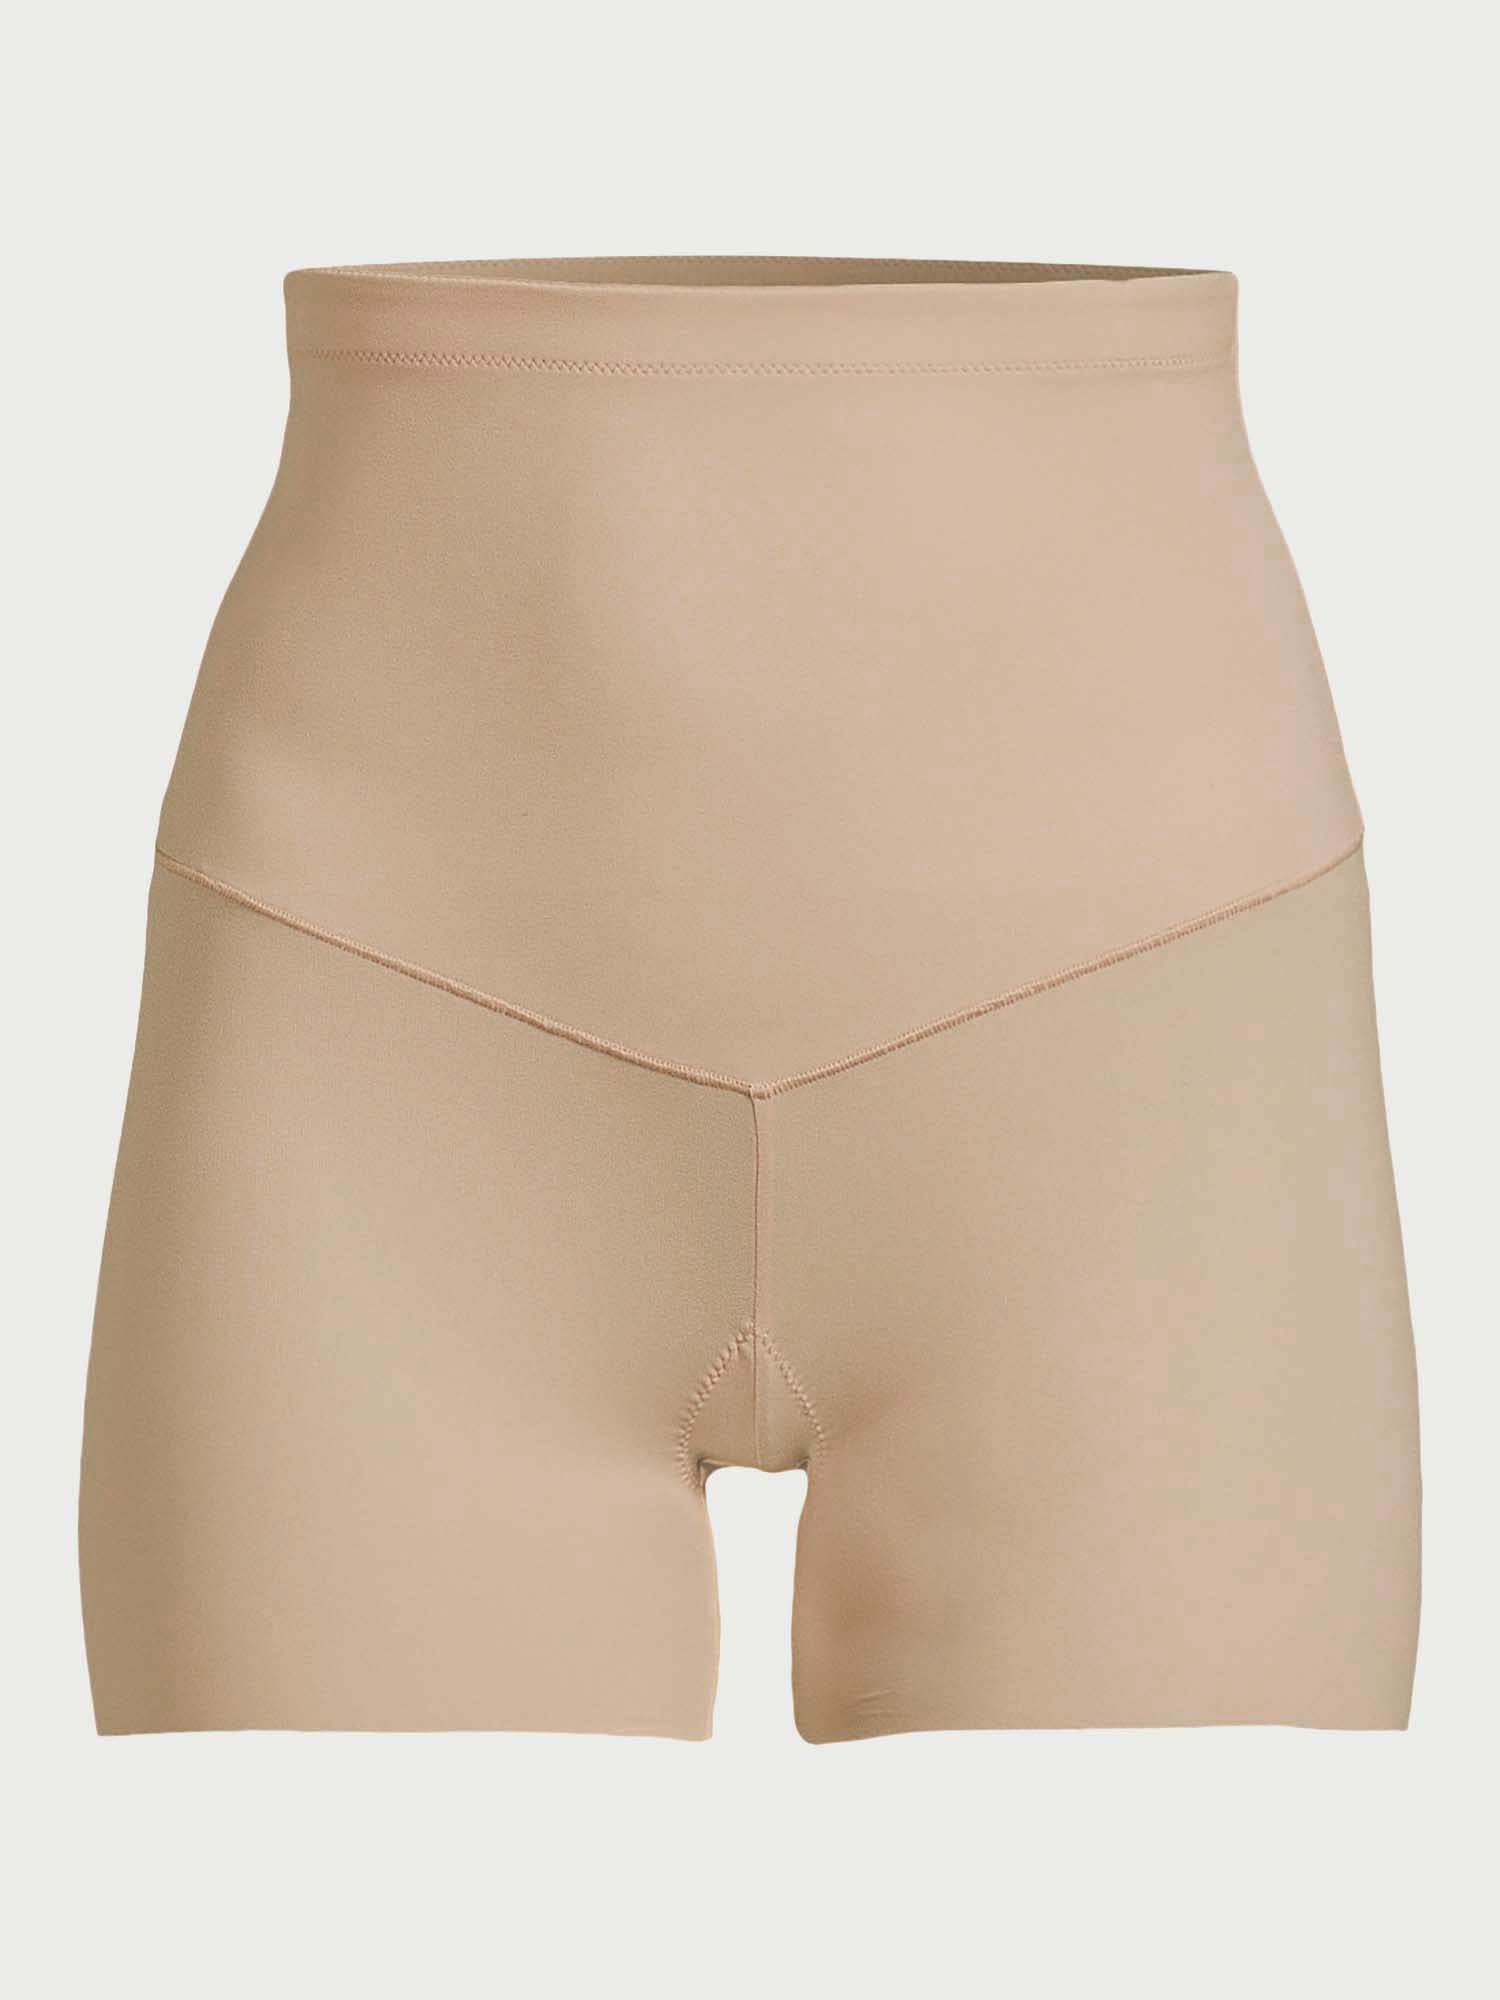 Joyspun Women’s Midrise Shaping Boyshort Underwear, Sizes S to 3X